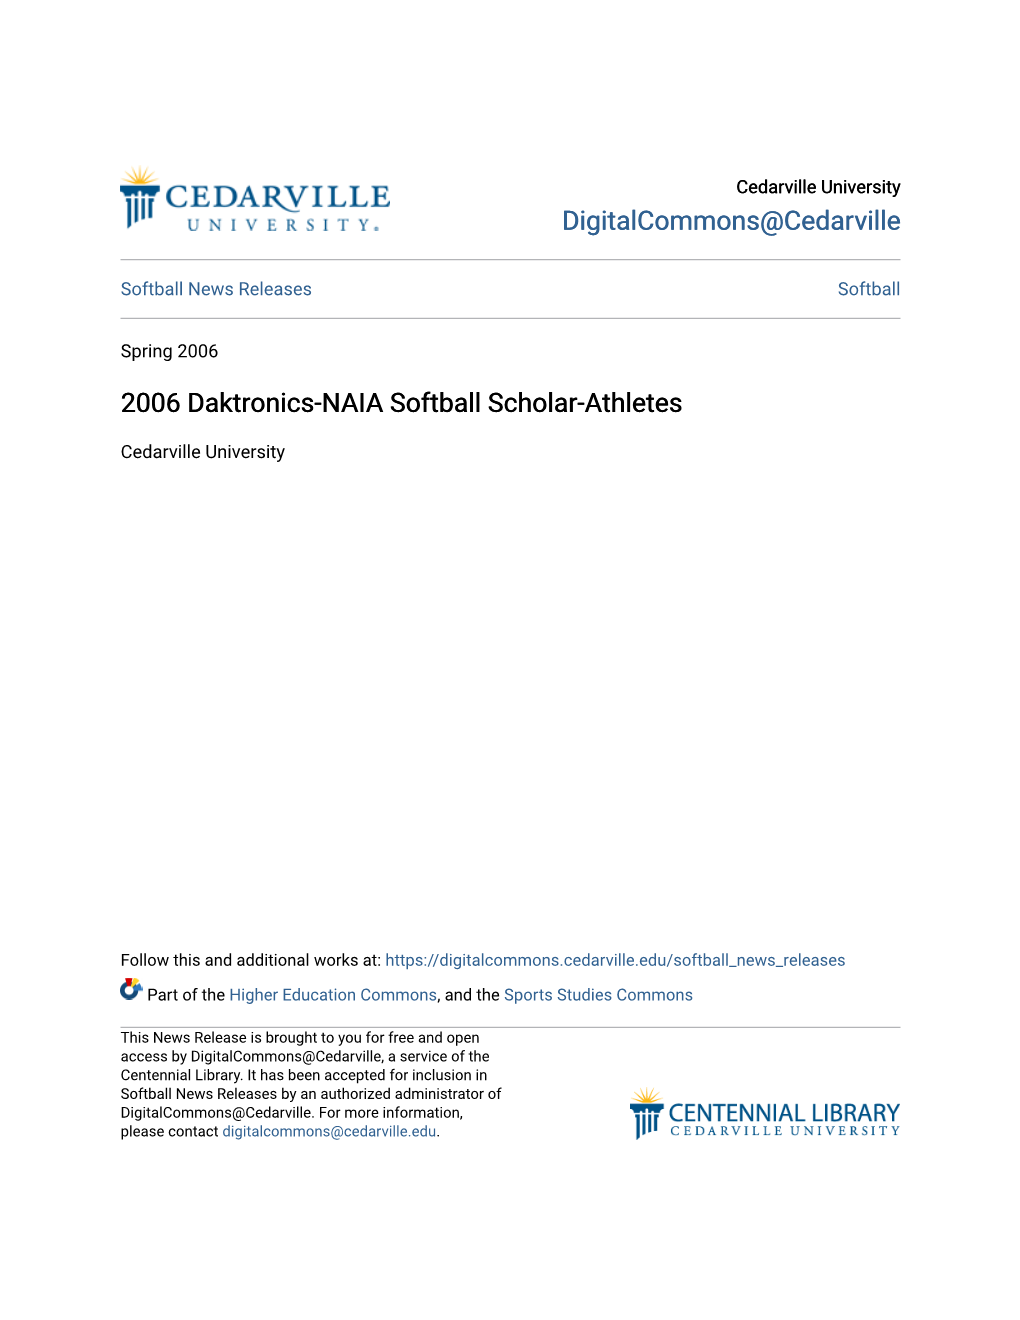 2006 Daktronics-NAIA Softball Scholar-Athletes